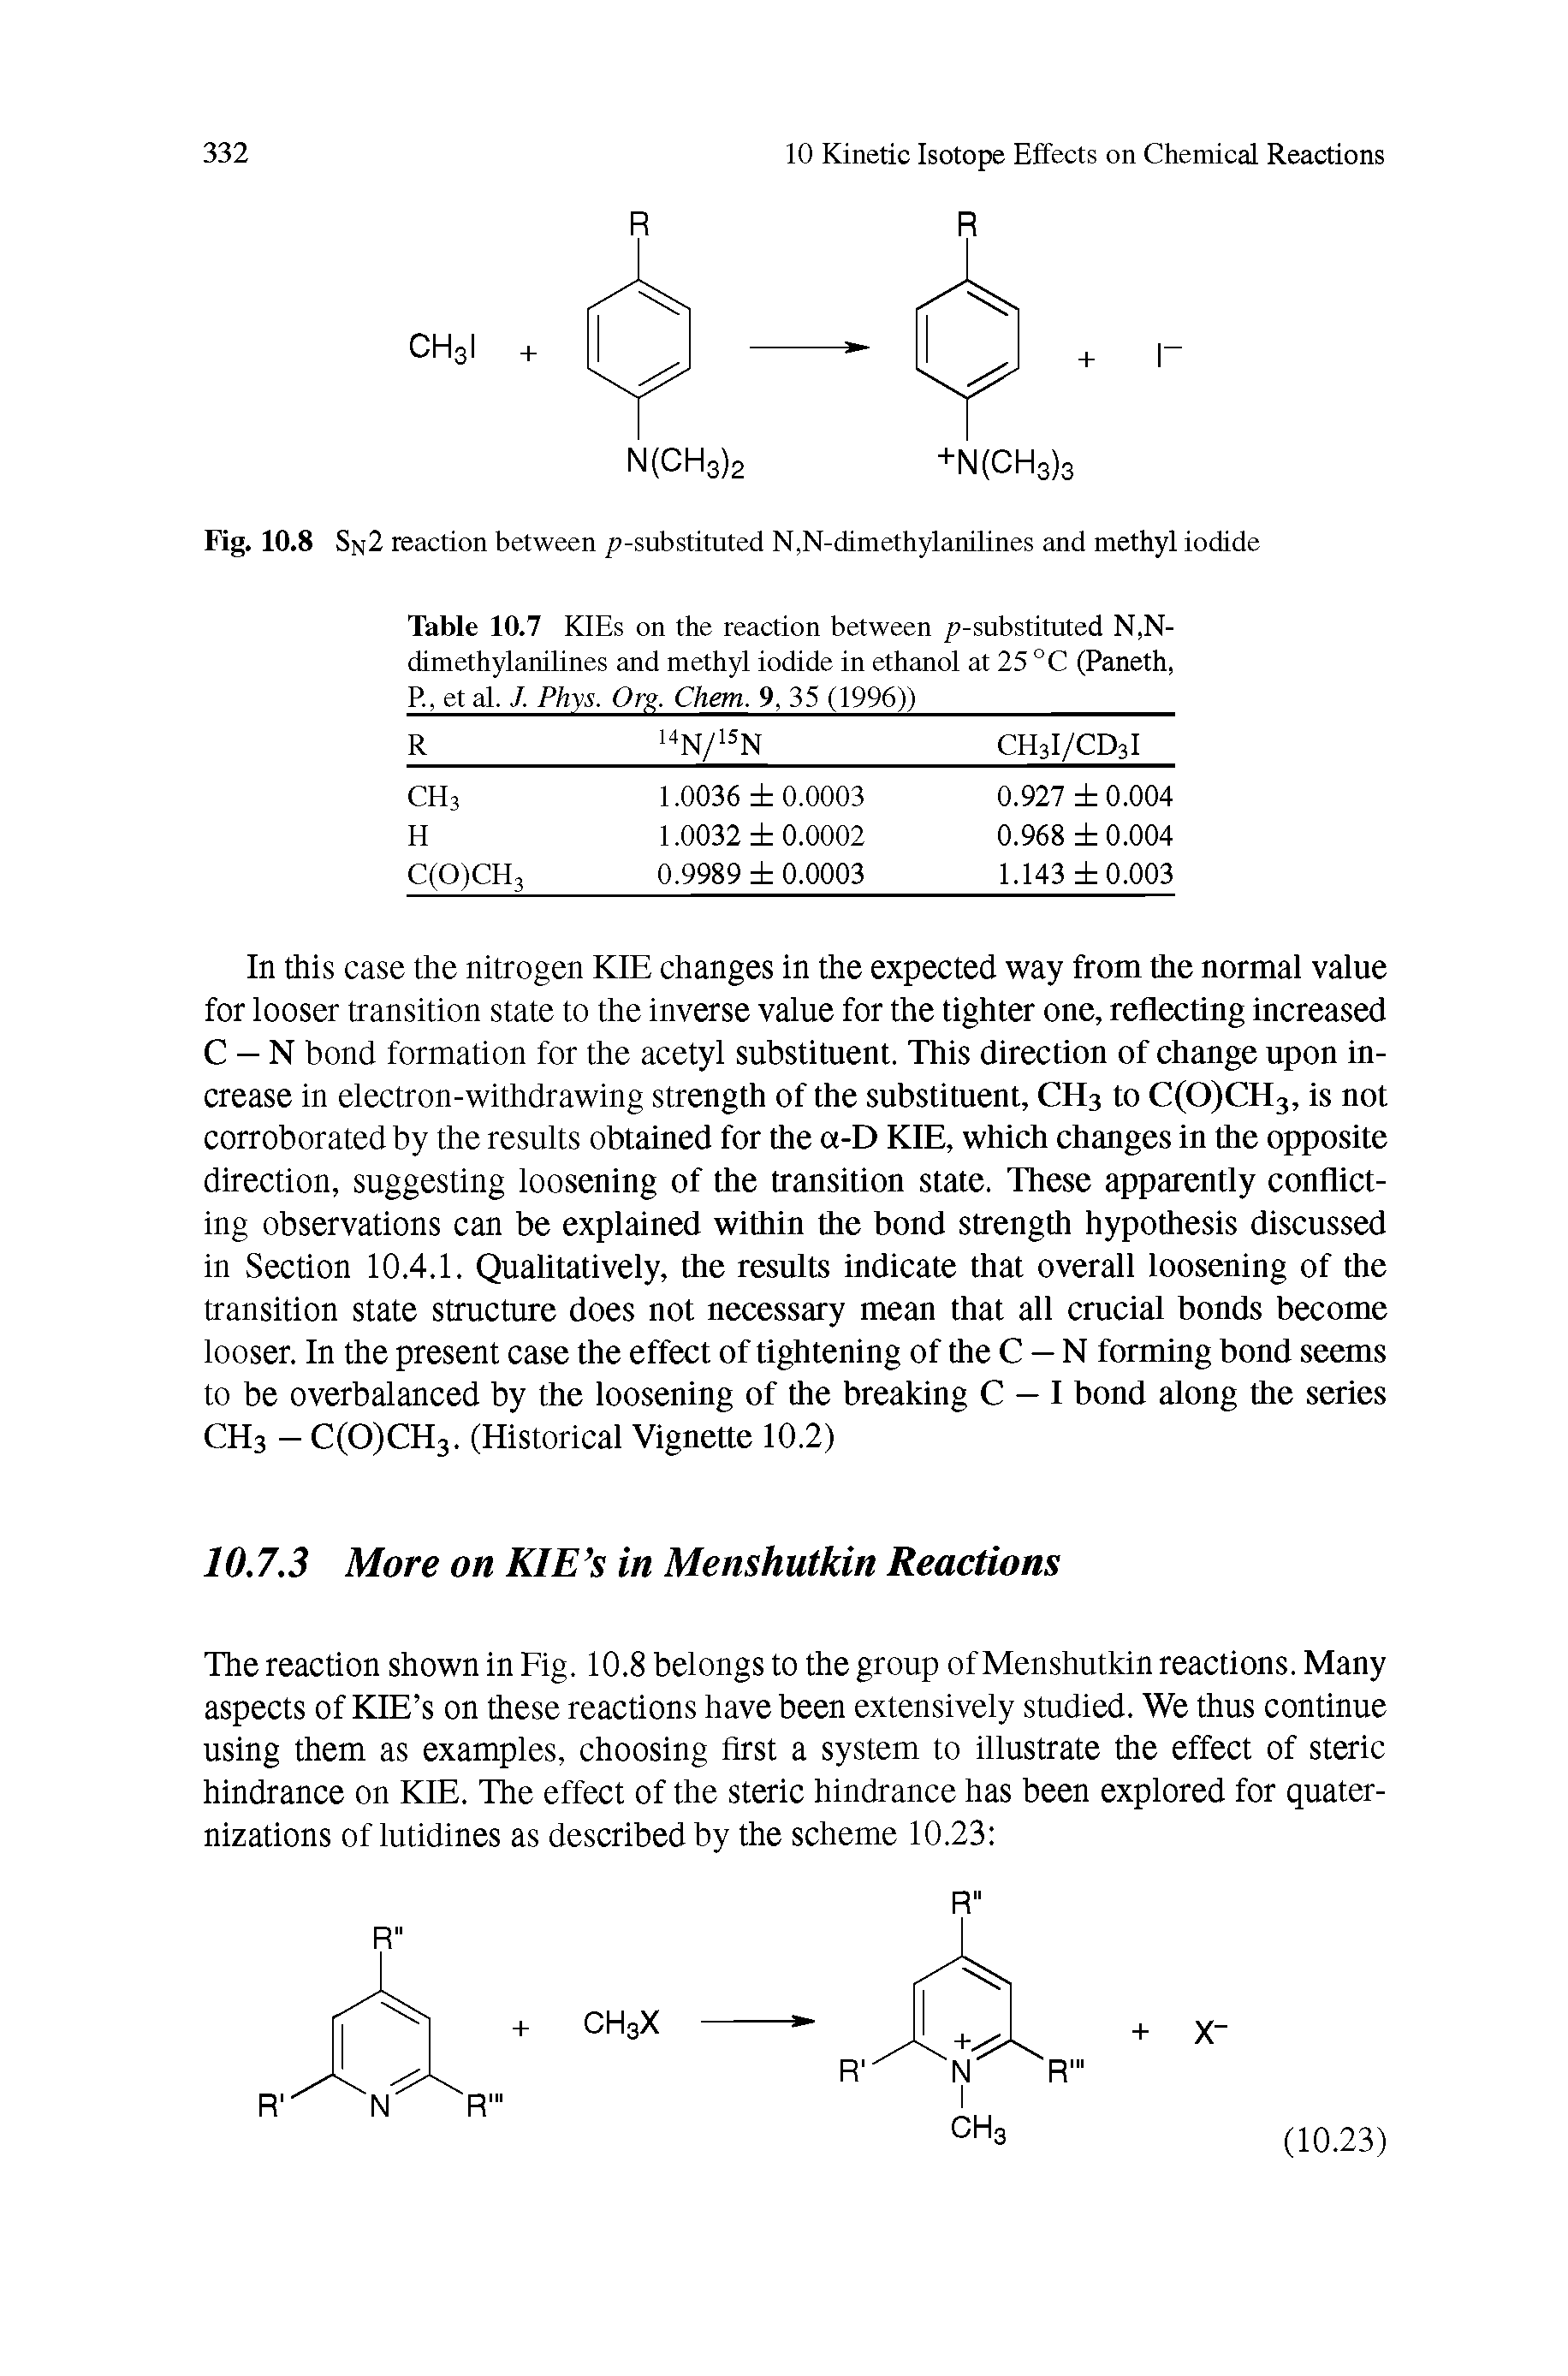 Table 10.7 KIEs on the reaction between p-substituted N,N-dimethylanilines and methyl iodide in ethanol at 25 °C (Paneth, P., et al. J. Phys. Org. Chem. 9, 35 (1996)) ...